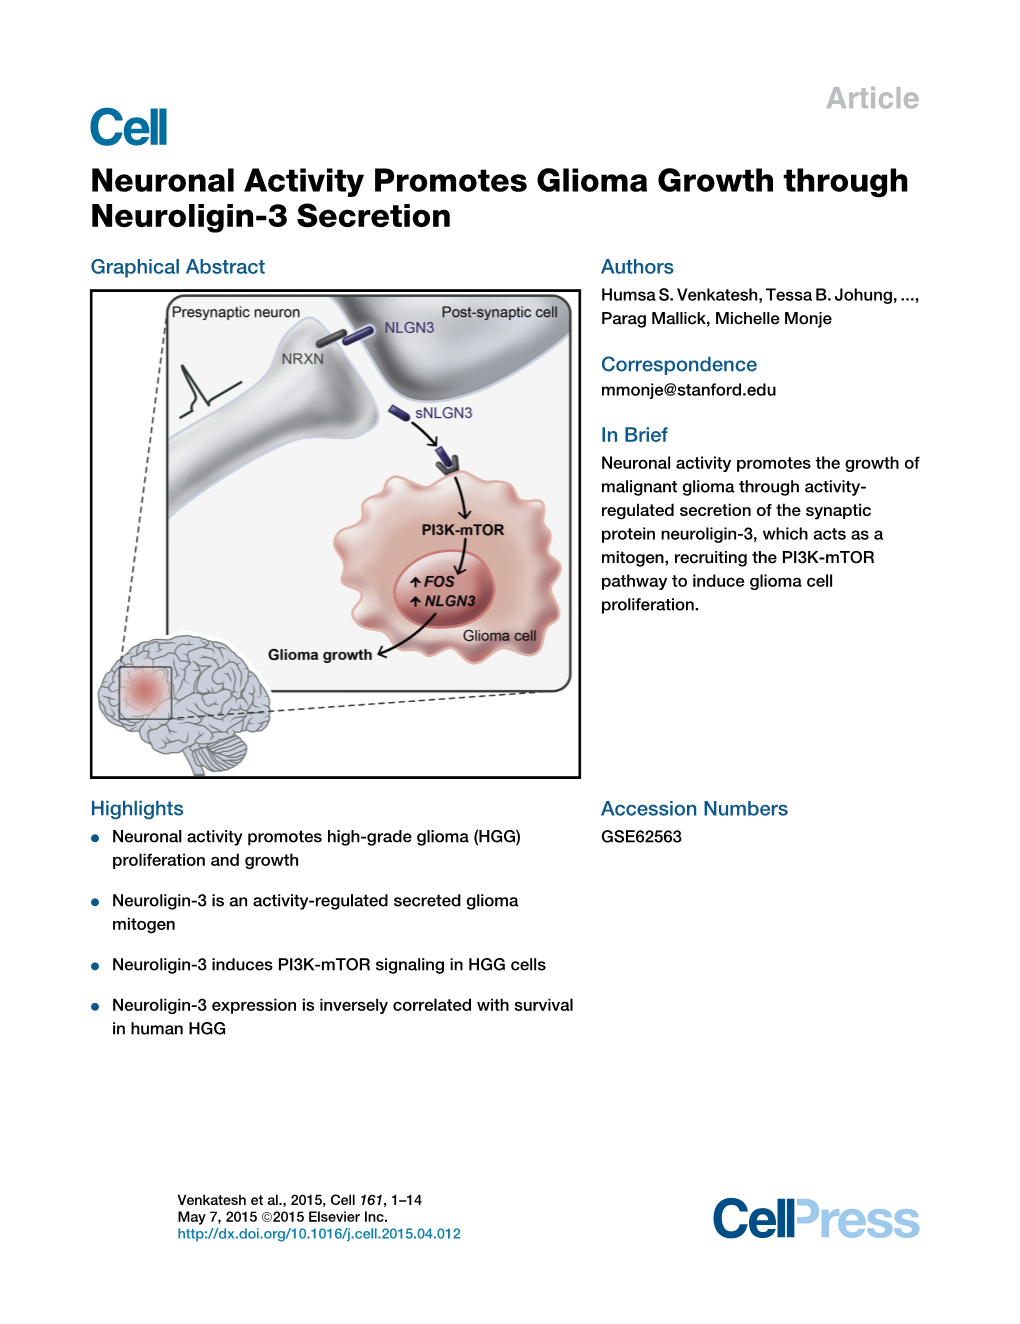 Neuronal Activity Promotes Glioma Growth Through Neuroligin-3 Secretion